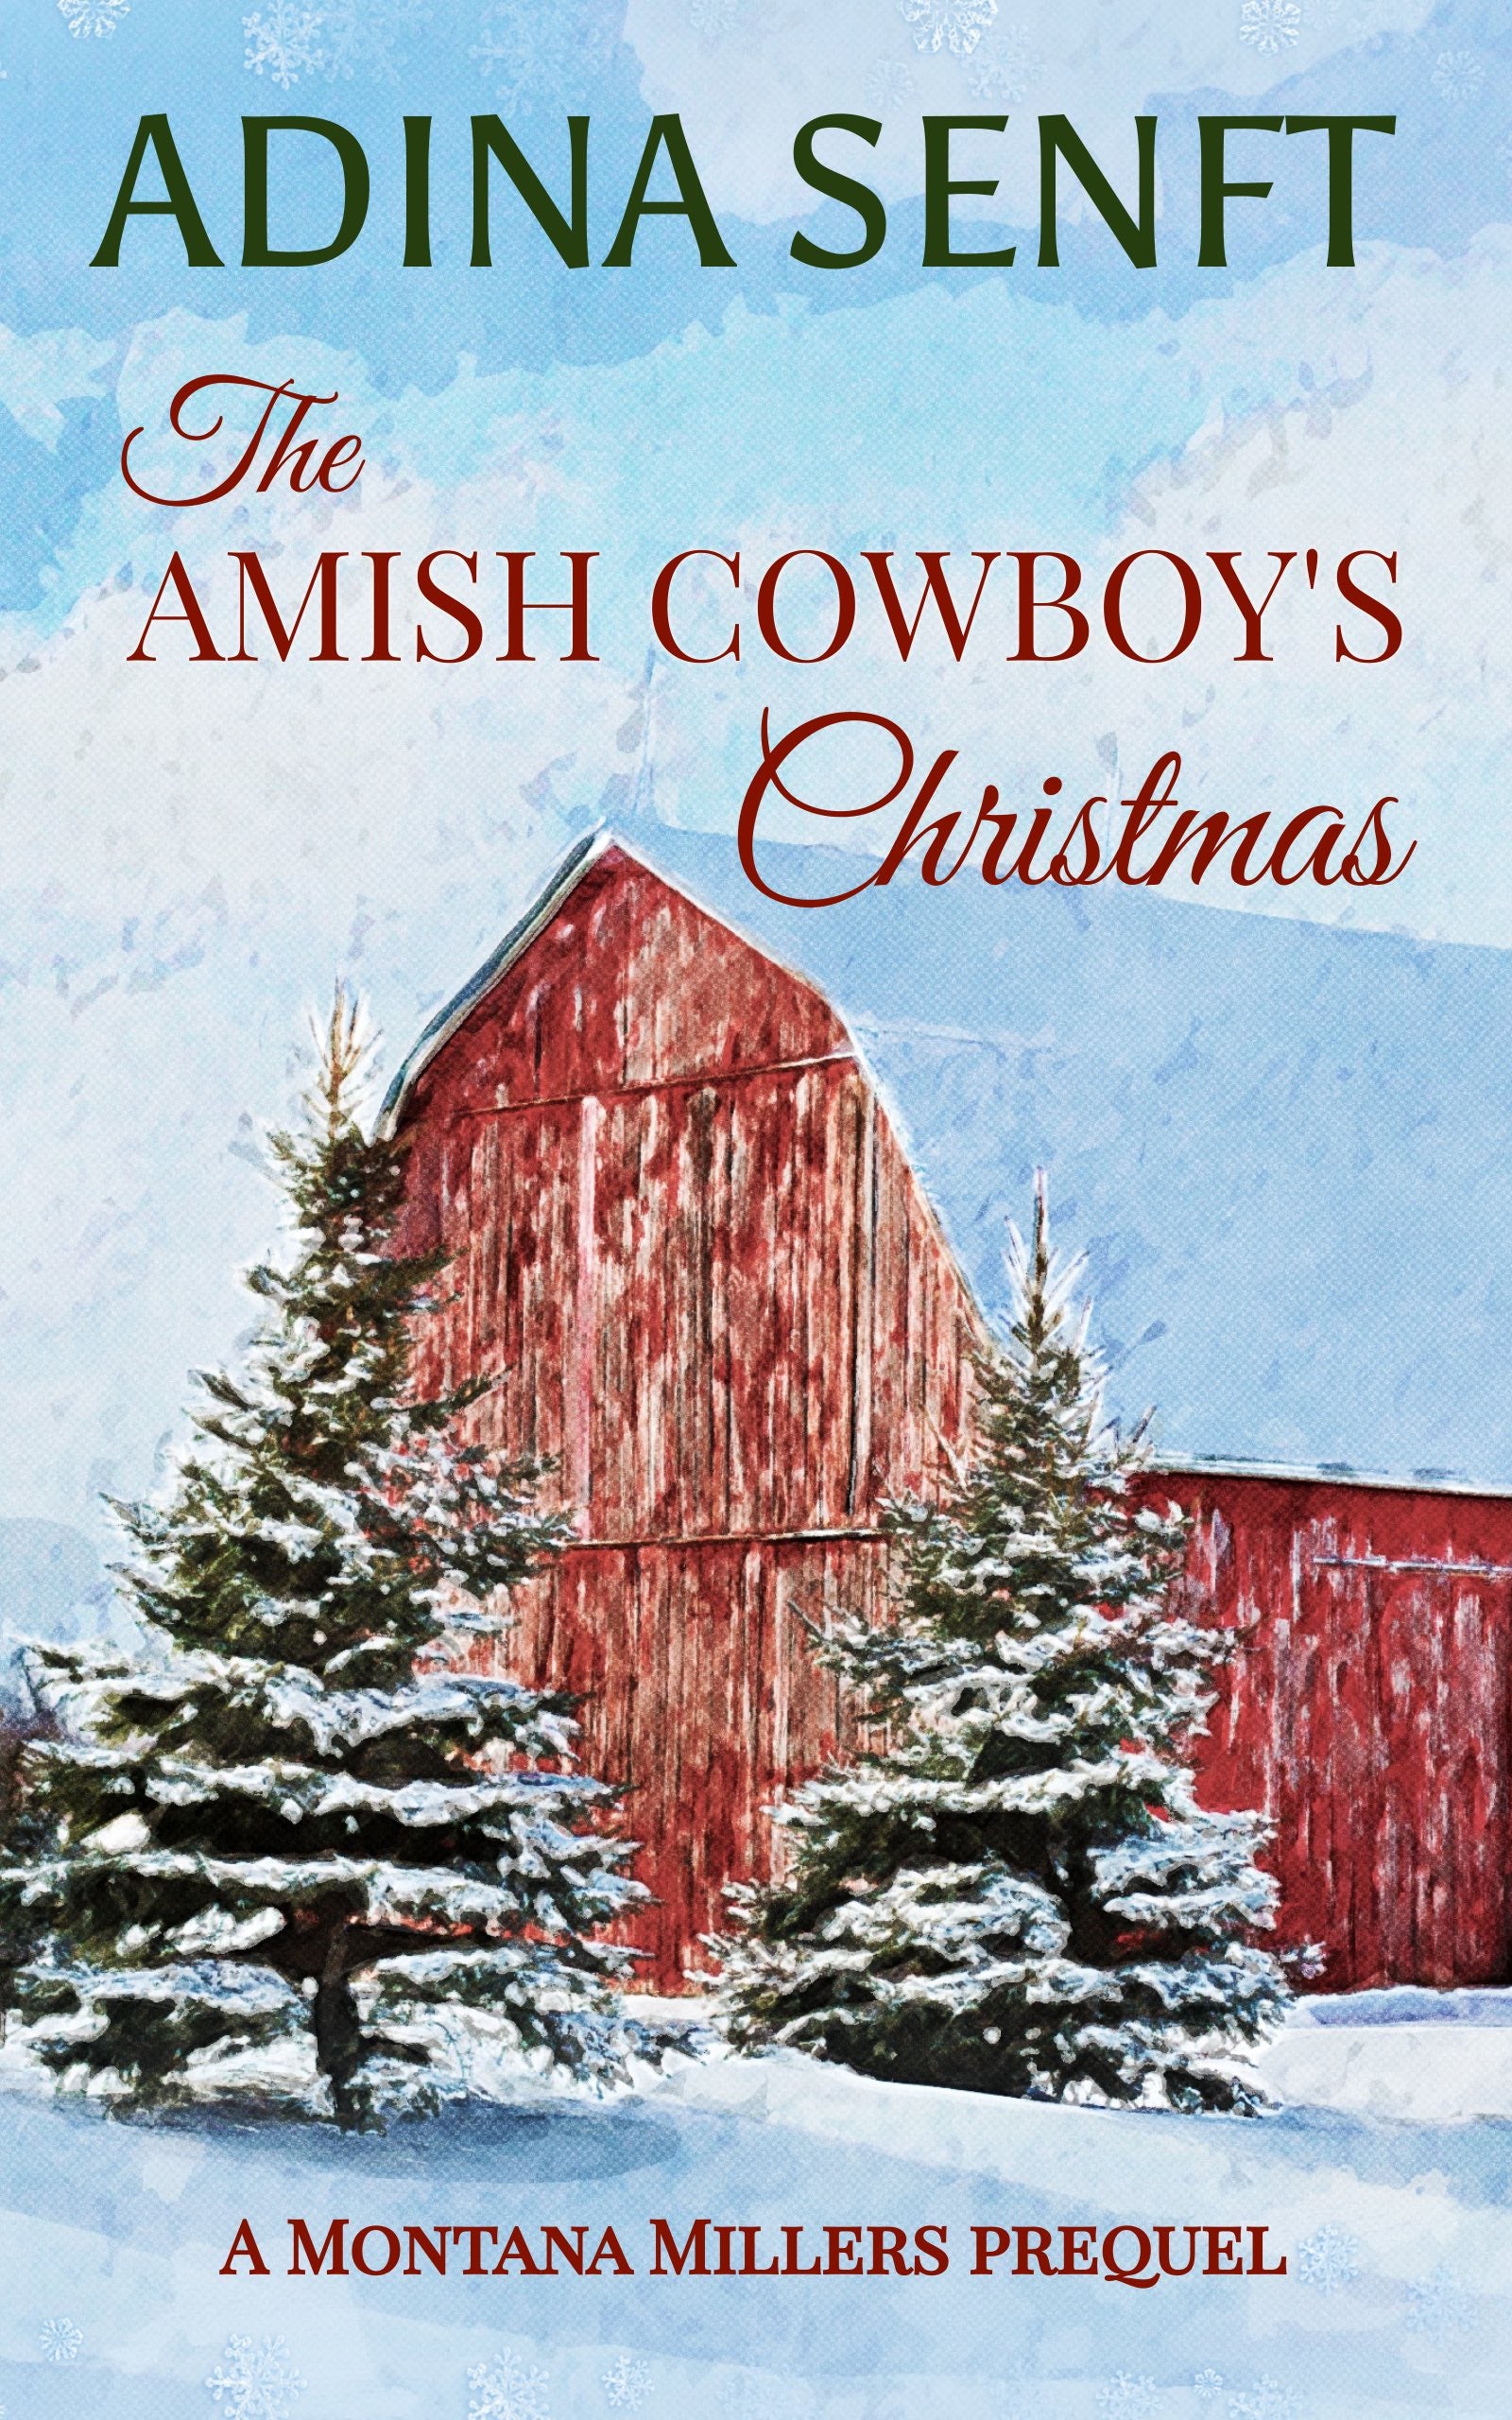 The Amish Cowboy's Christmas: A Montana Millers prequel novella by Adina Senft